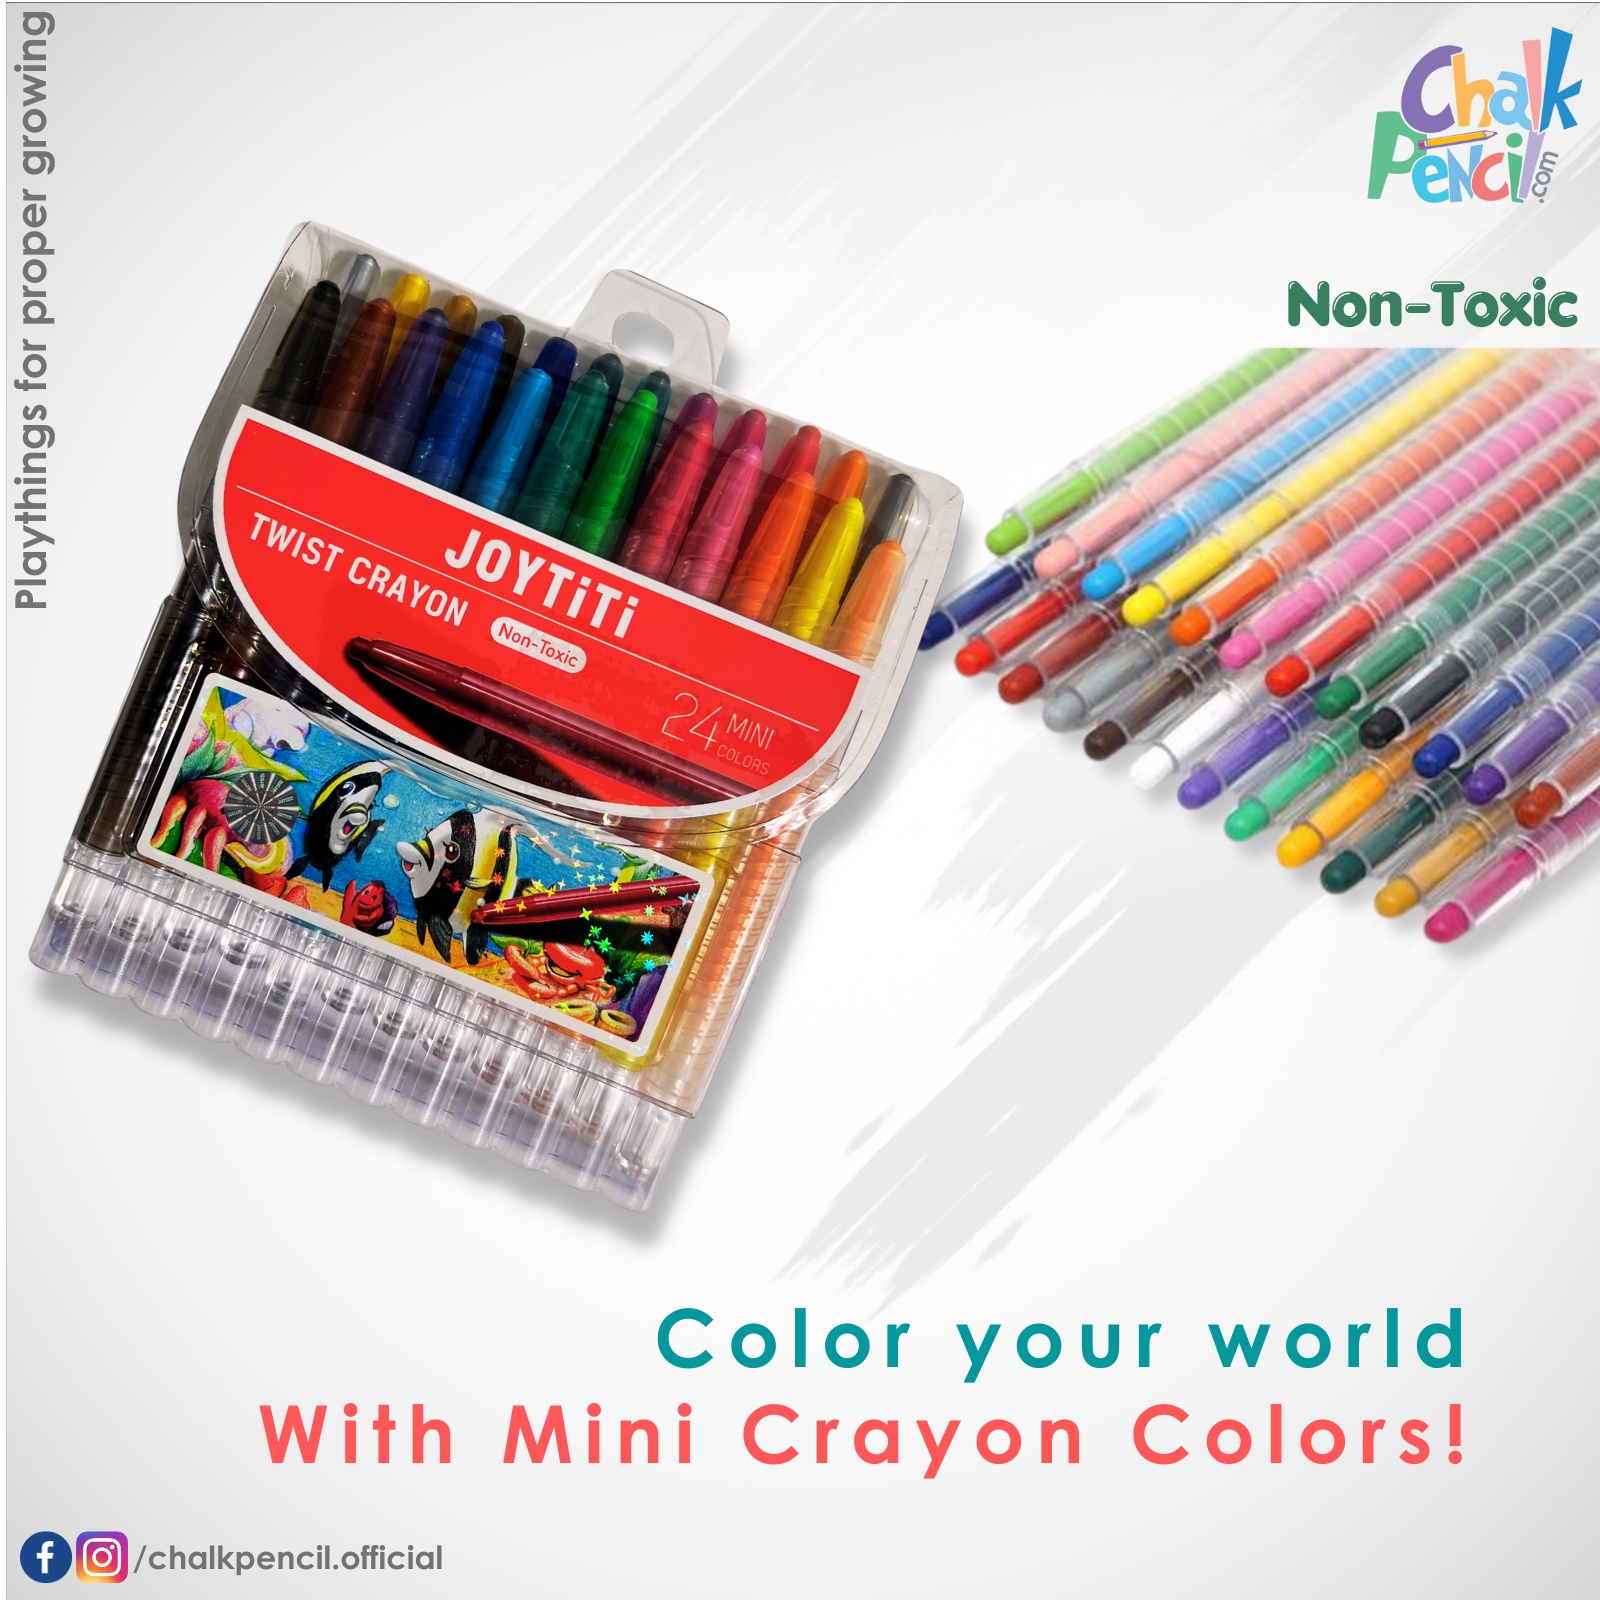 JOYTiTi Twist Crayon 24 Mini Colors